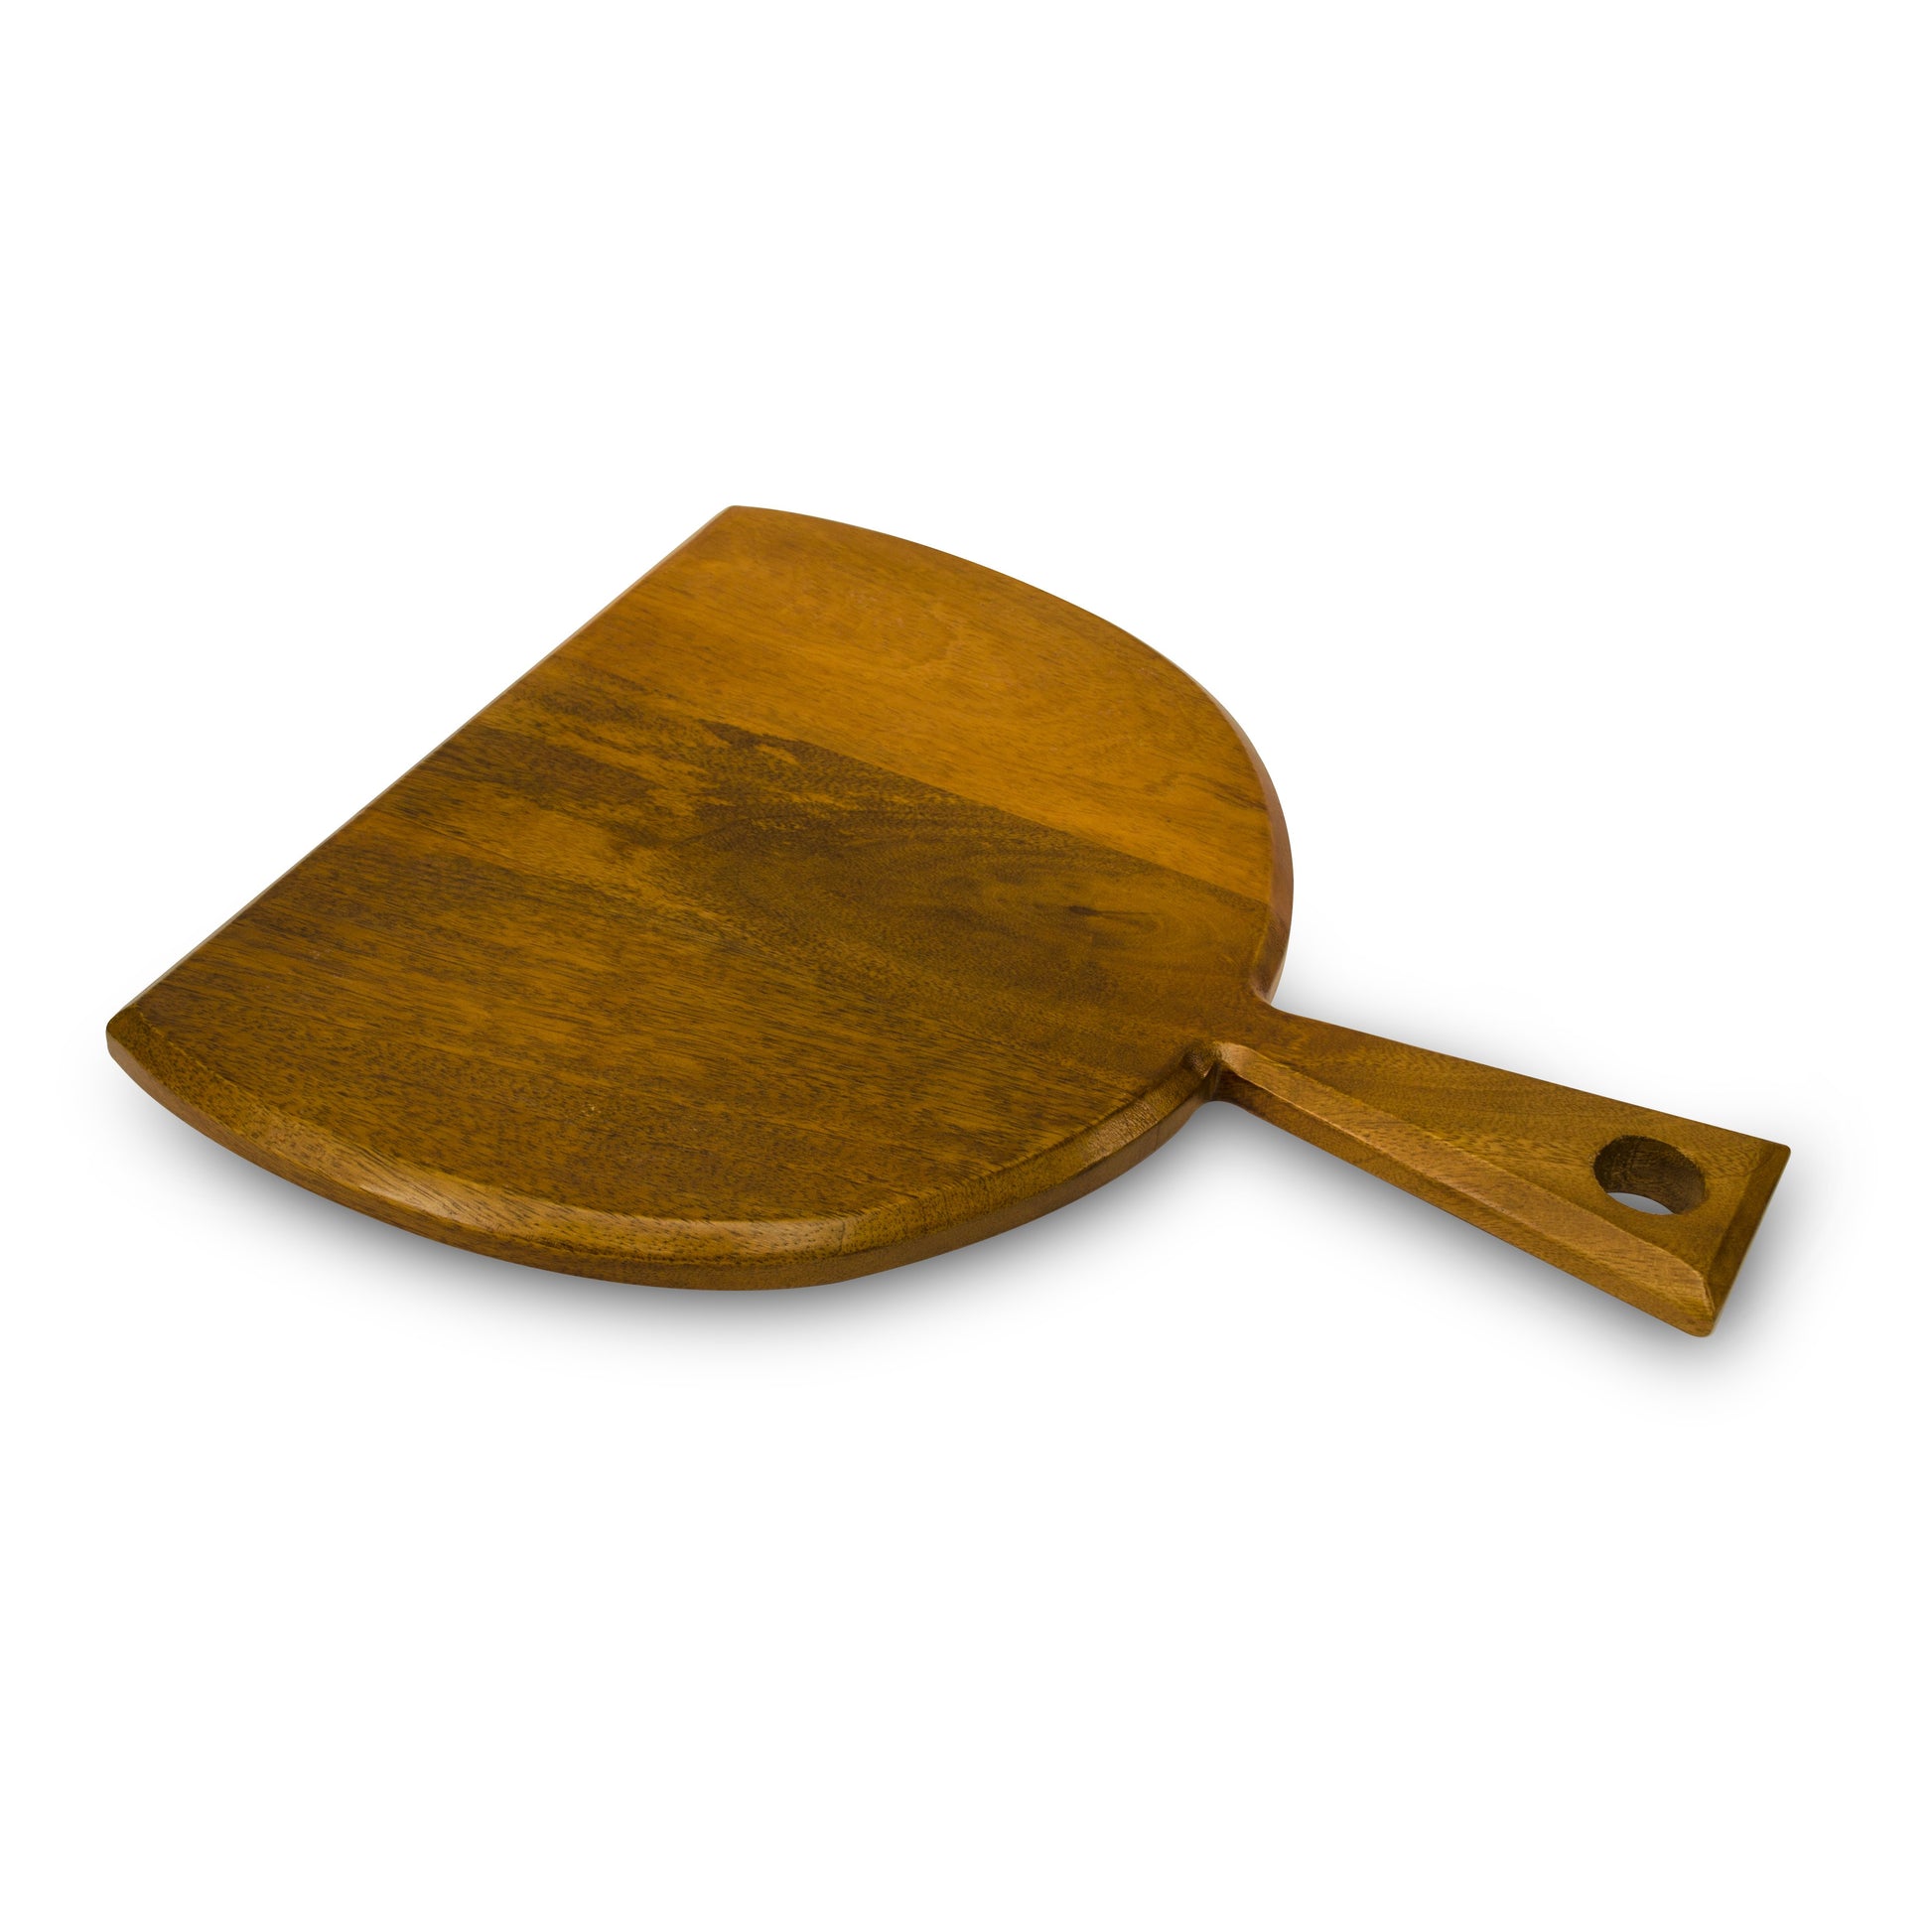 Fengari Natural Wooden serving Platter